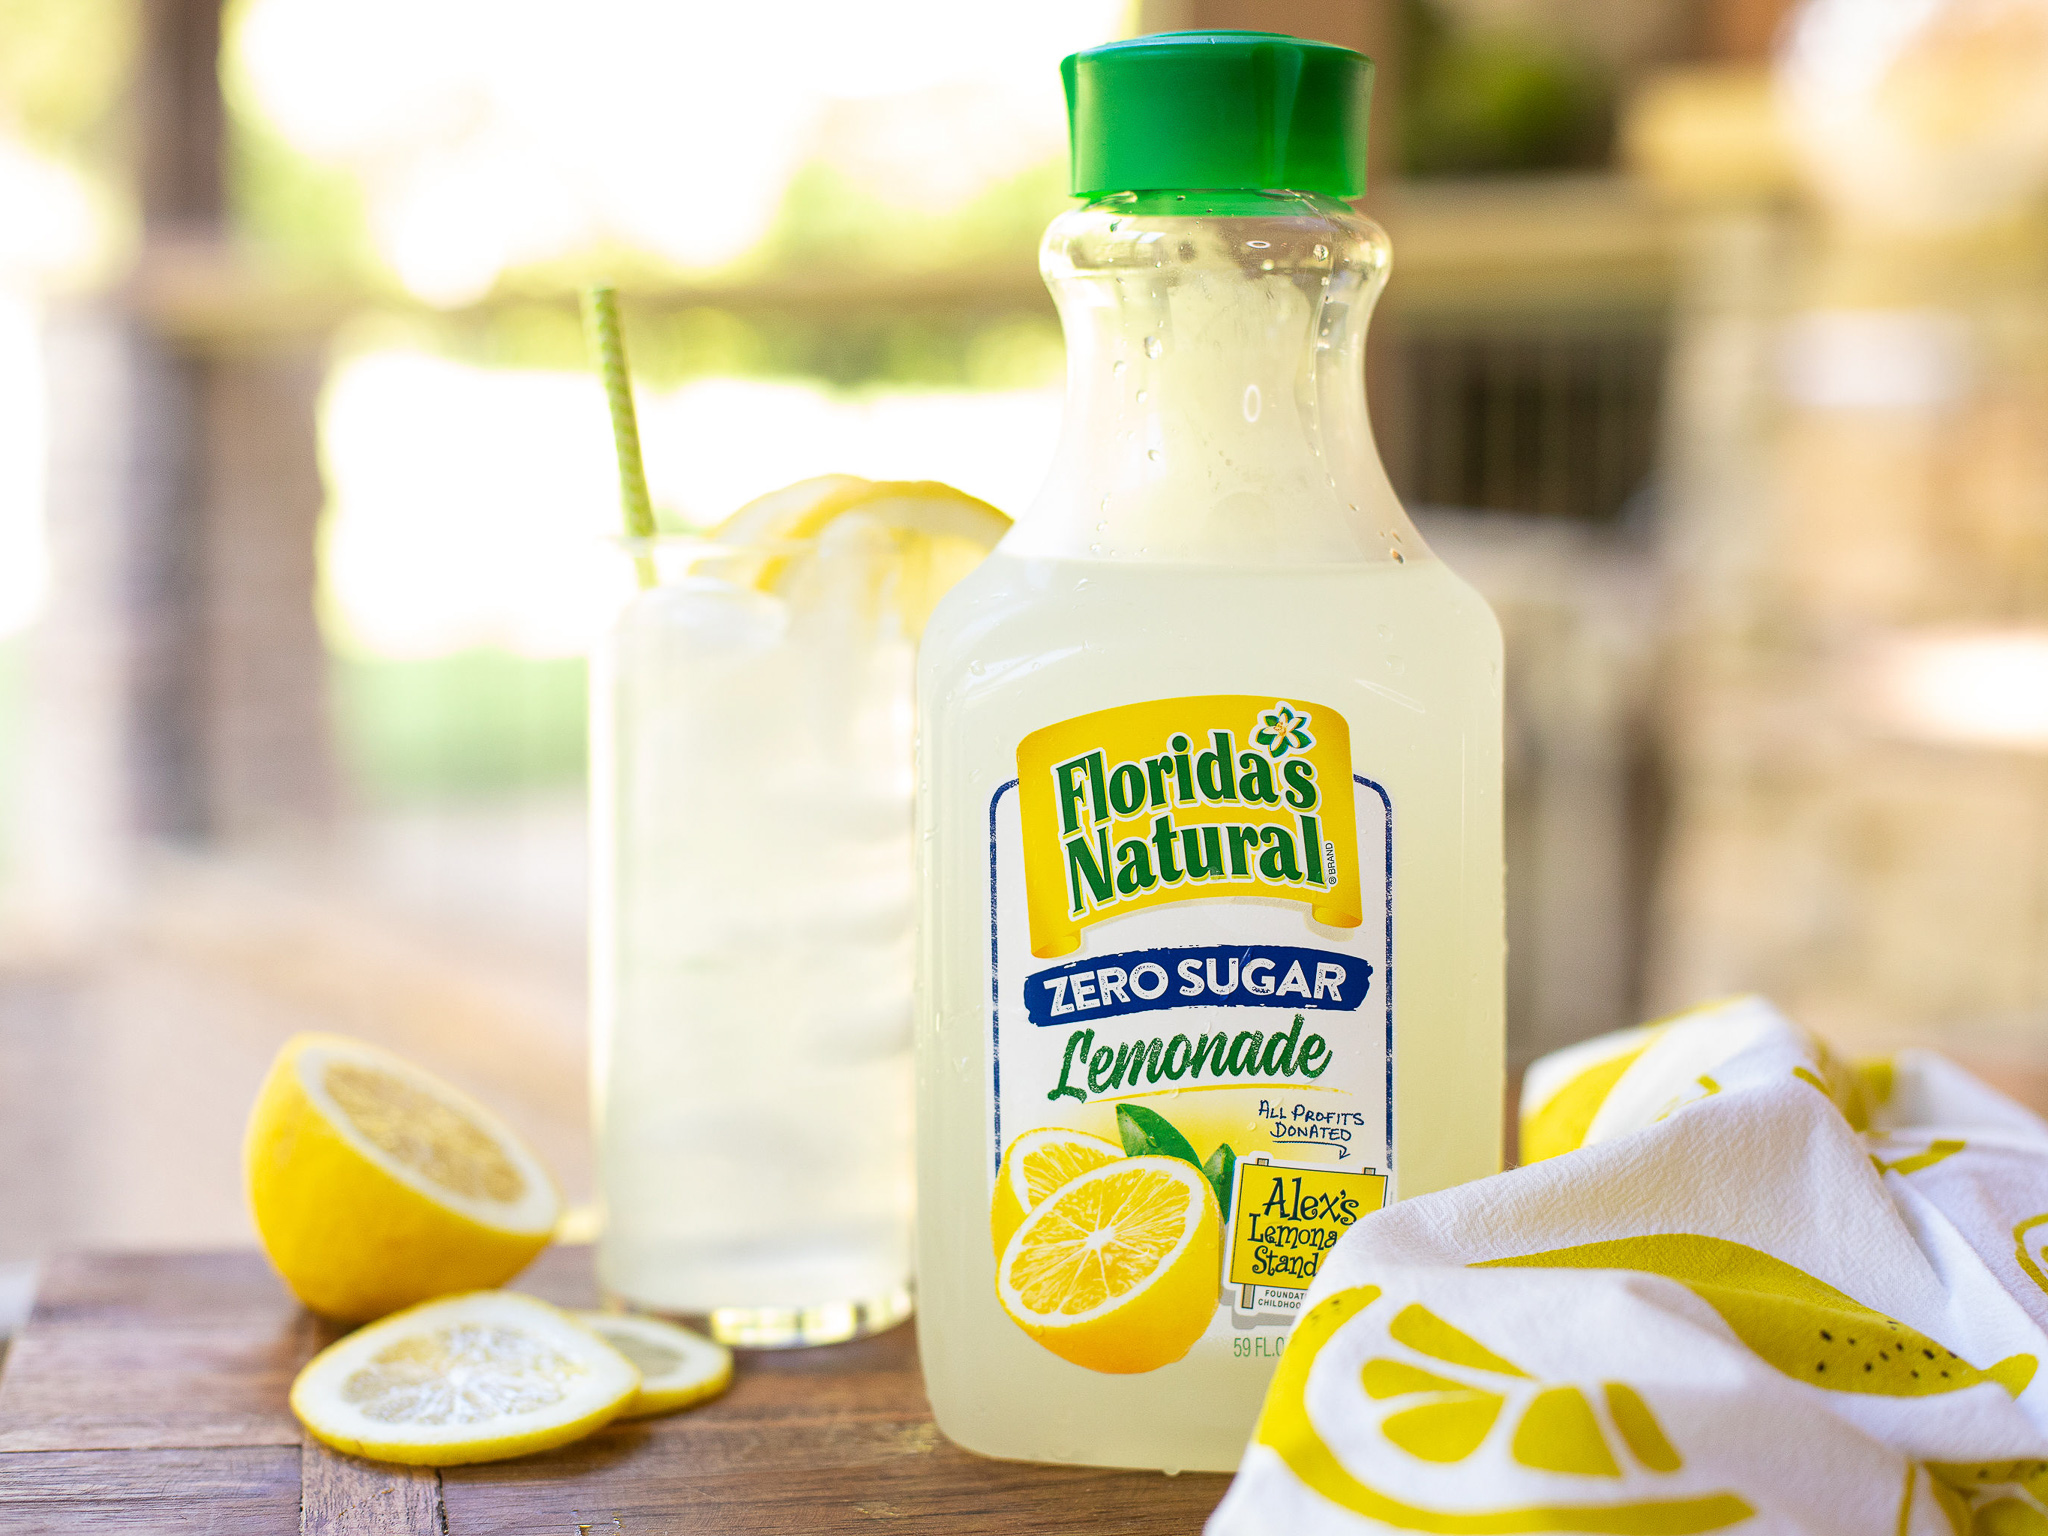 Florida’s Natural Zero Sugar Lemonade Just 99¢ At Publix